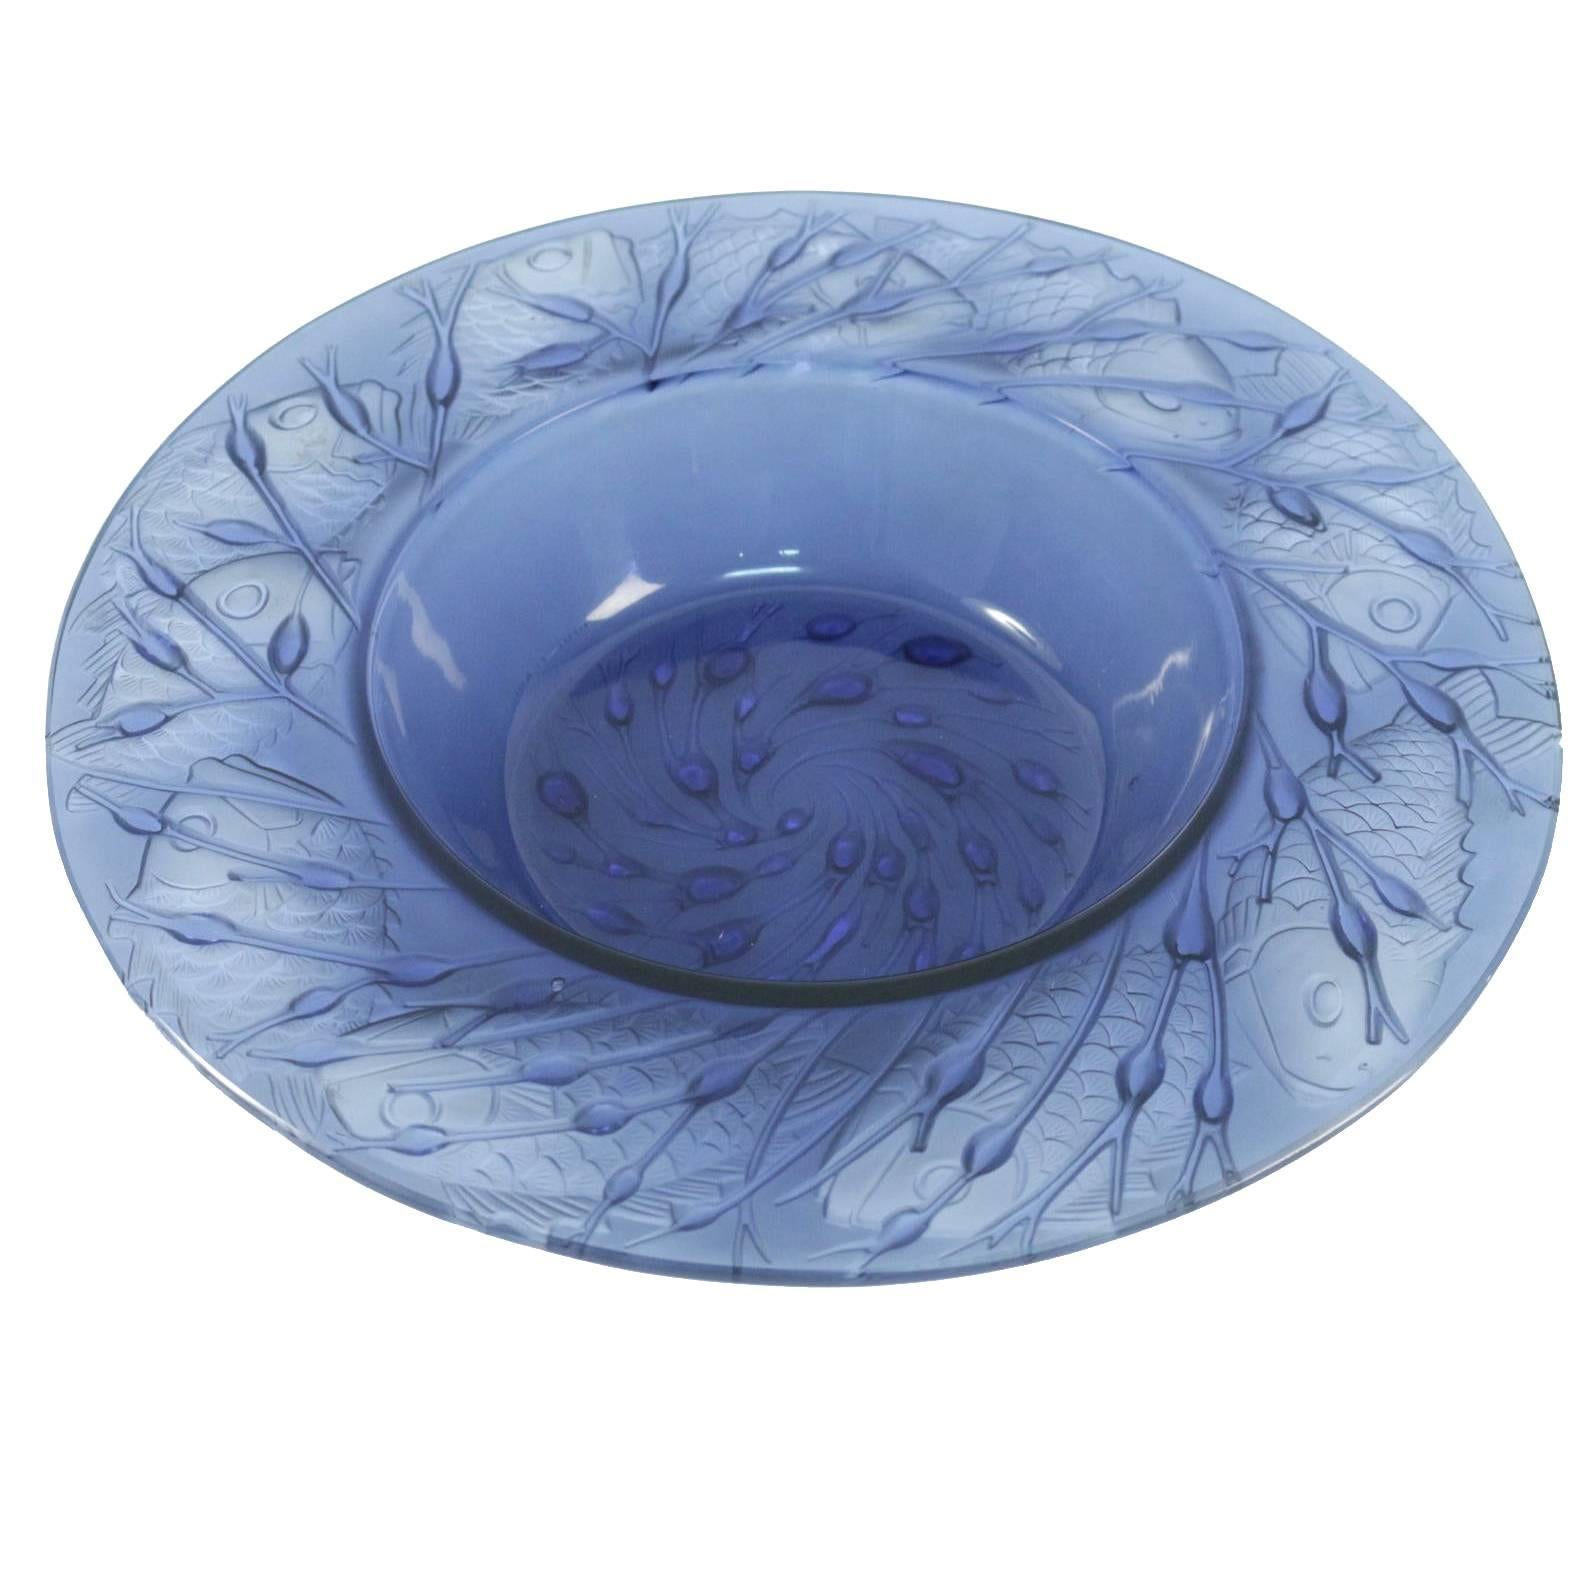 Lalique bowl Anvers:
38.2 cm wide blue fish under water plants motif glass R. Lalique bowl.
Blue molded pressed glass signed and stamped.
Coupe Anvers (1930).
Épreuve en verre bleu moulé pressé.
Signée.
Diameter: 38.2